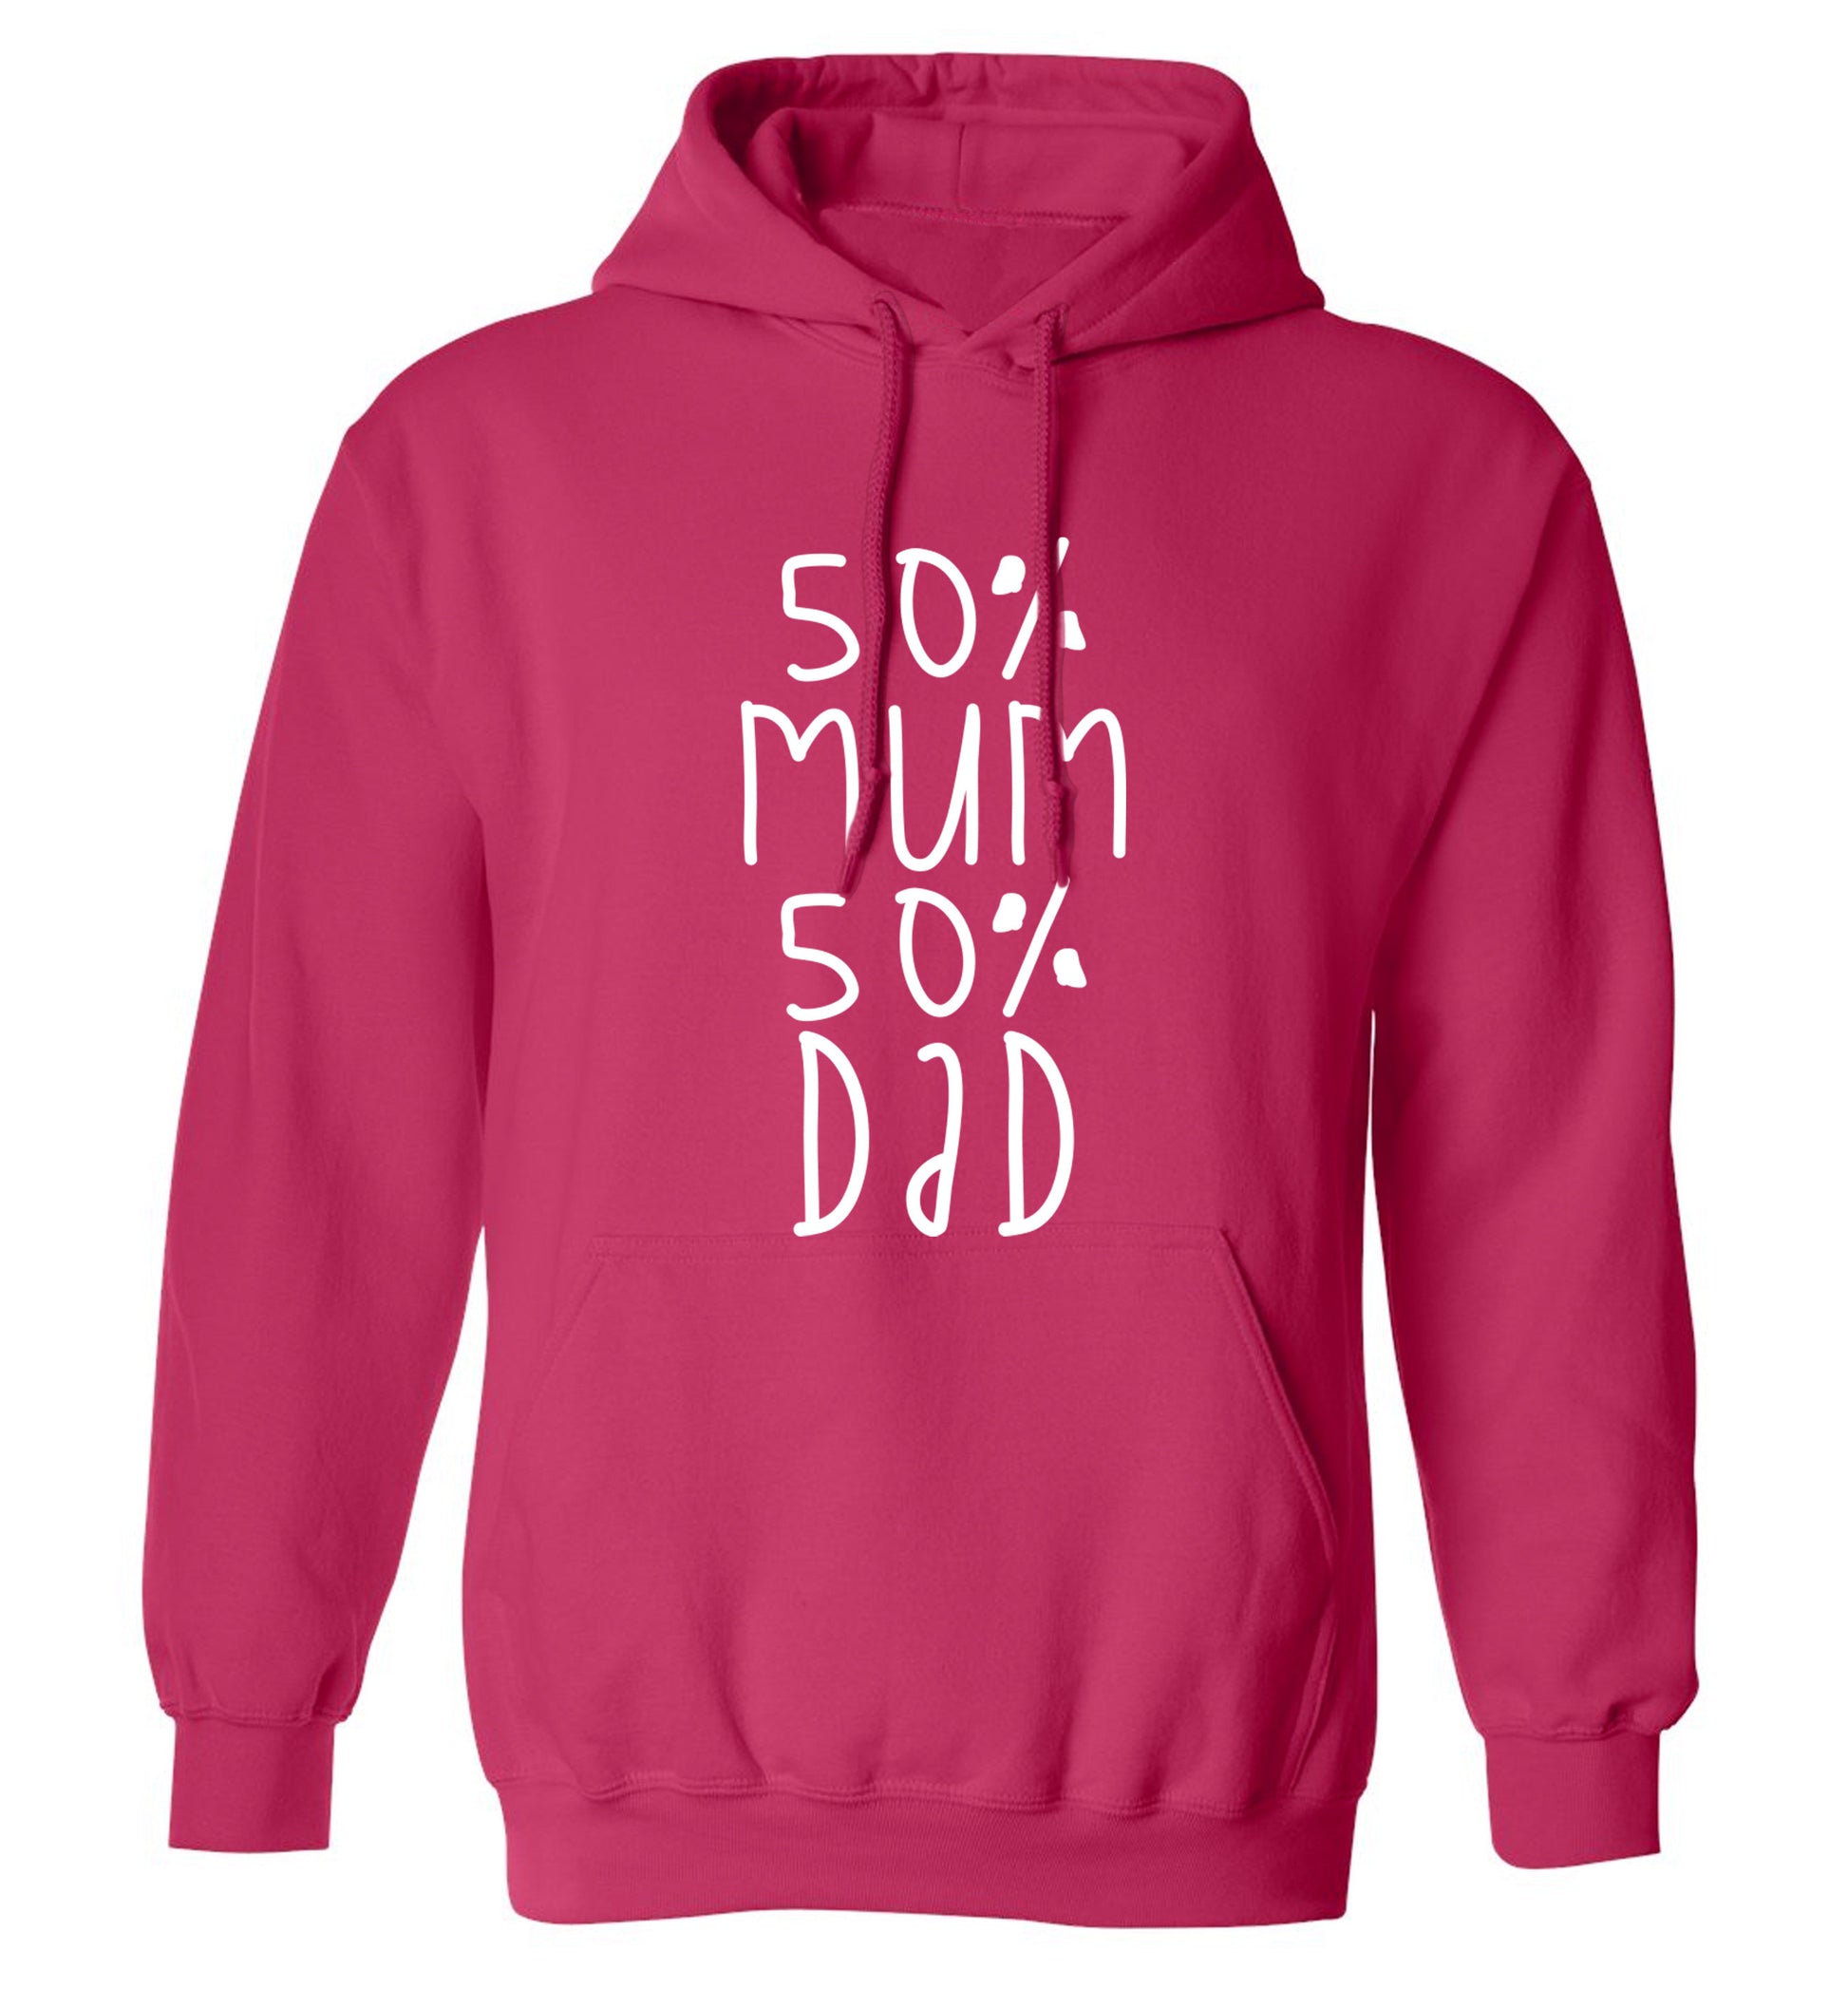 50% mum 50% dad adults unisex pink hoodie 2XL